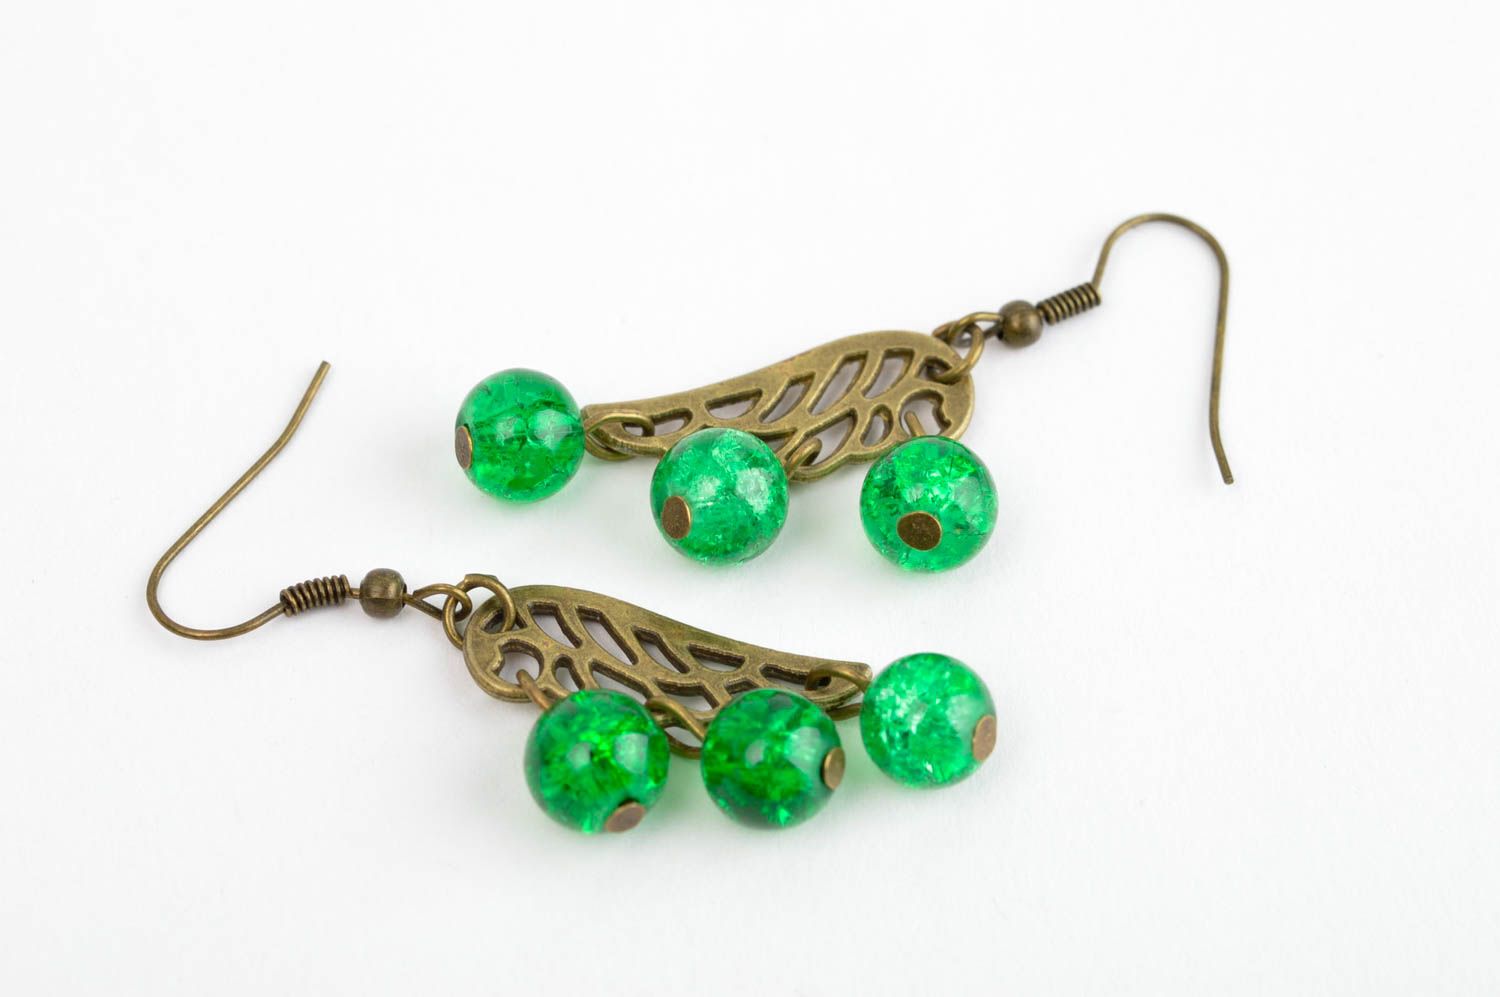 Handmade earrings designer accessory gift ideas unusual earrings beads jewelry photo 3